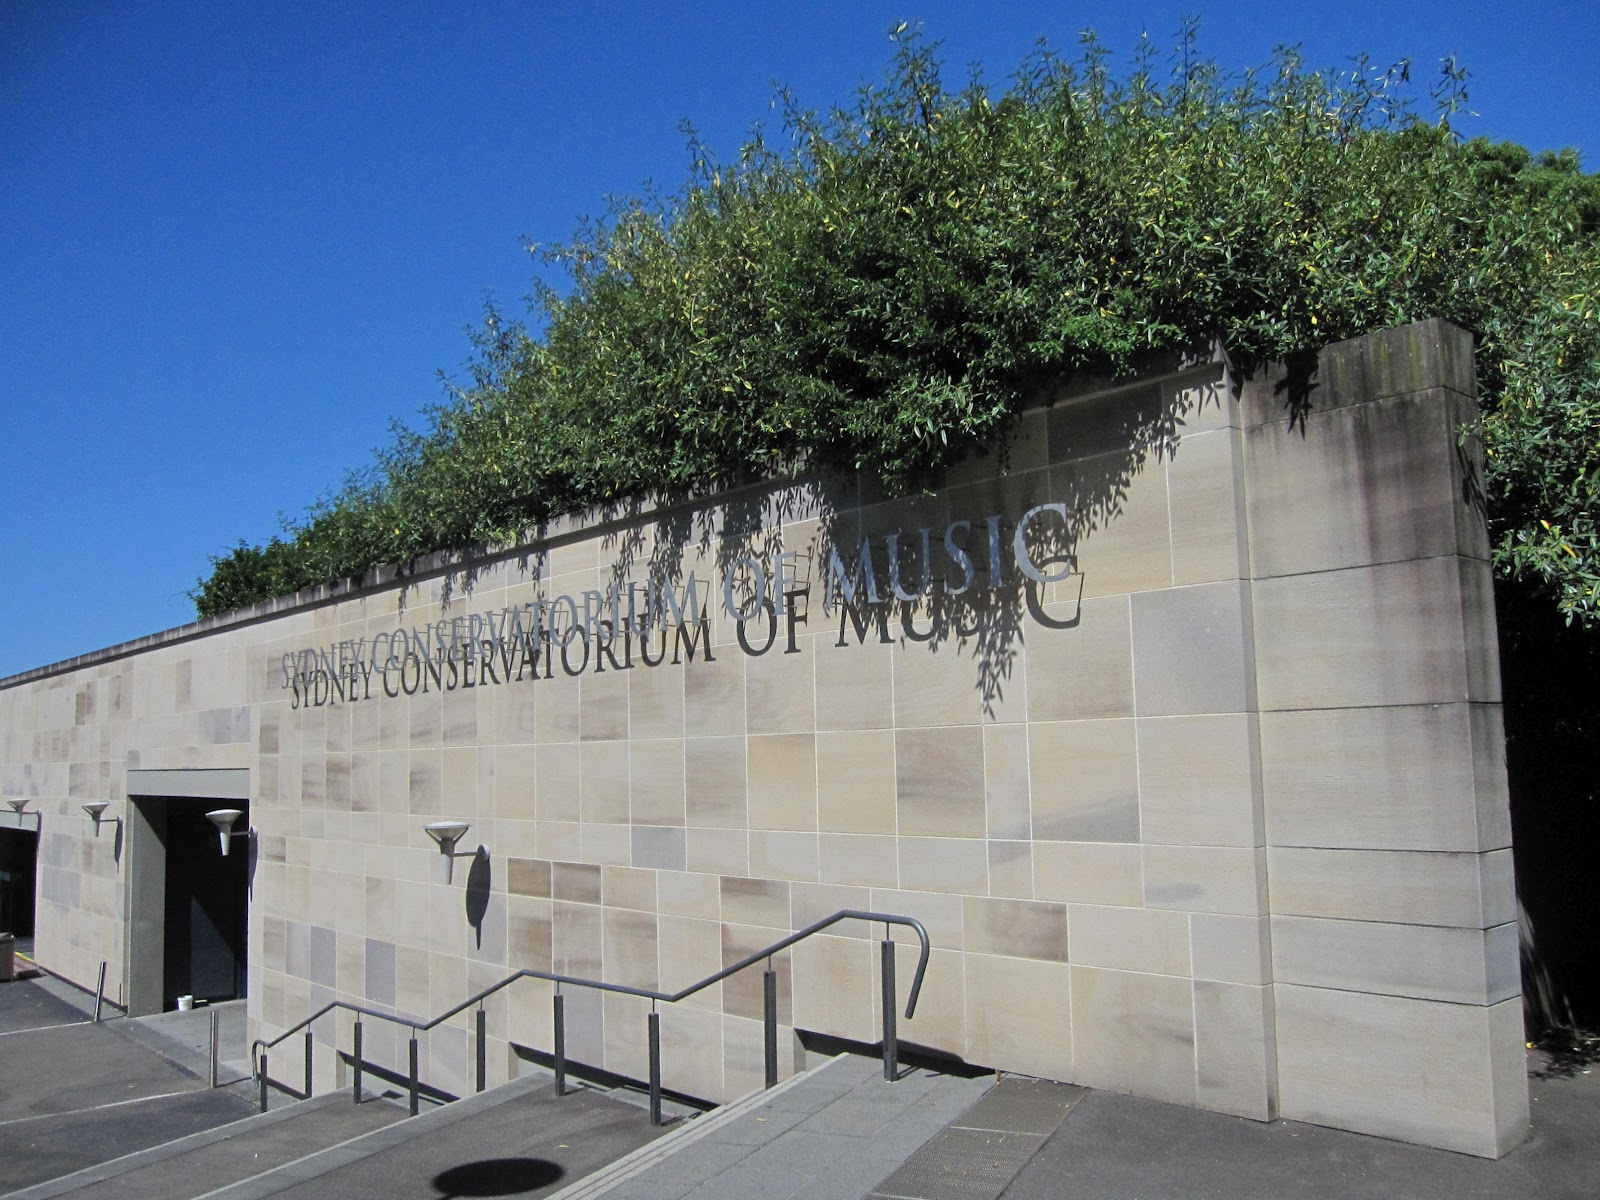 Sydney Conservatorium of Music to light up for VIVID